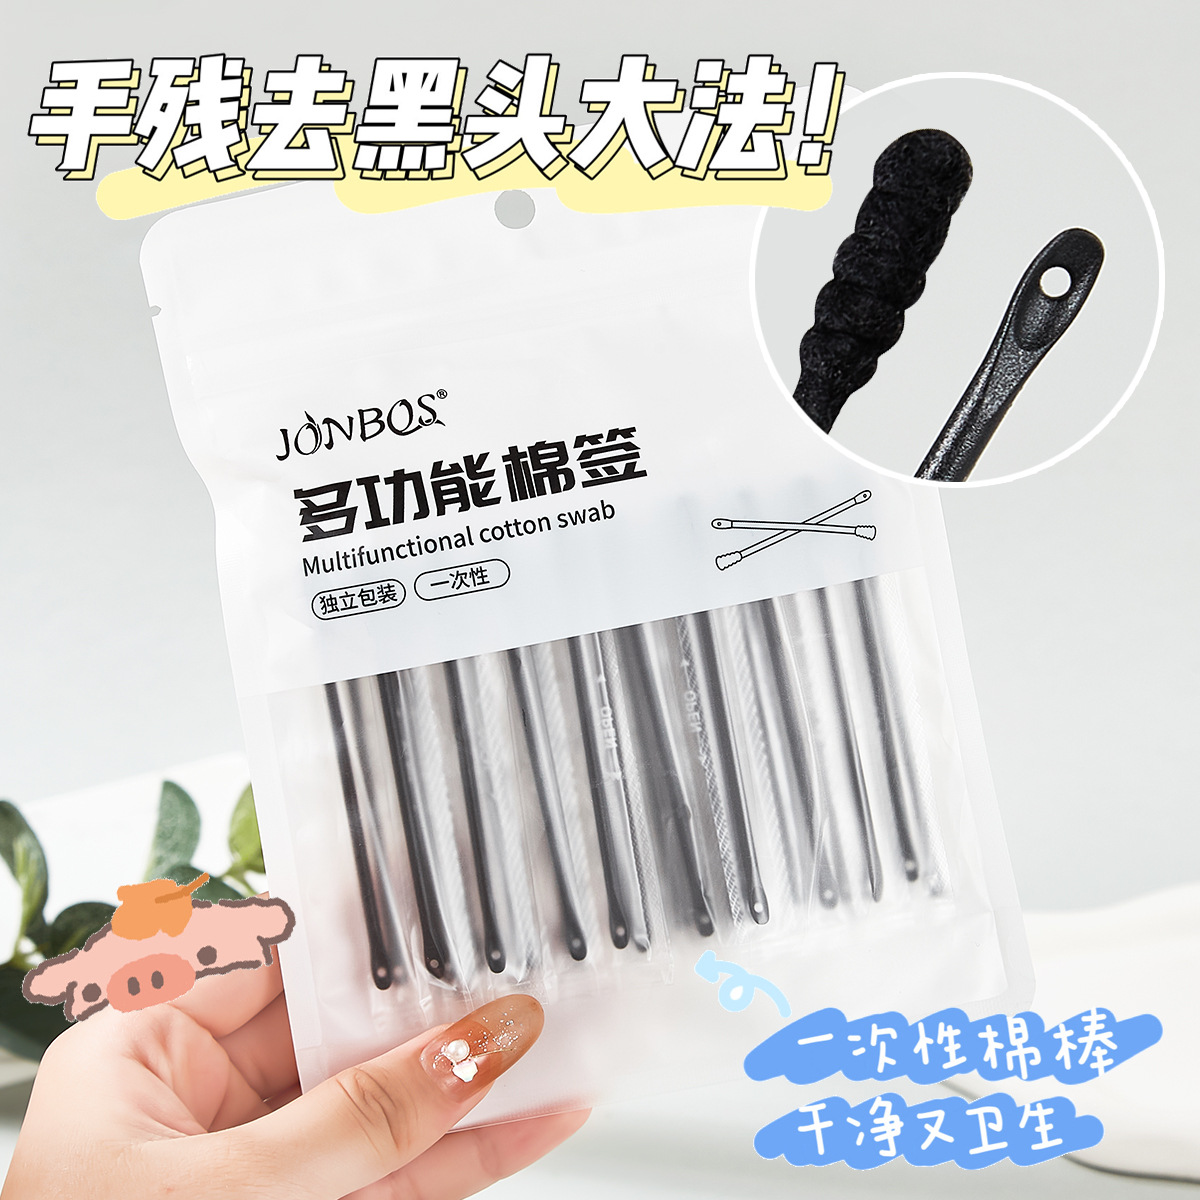 Jonbos Jiao Bo Silk Disposable Blackhead Removal Cotton Swab Stick Acne Scraper Pop Pimples Makeup Special Double Ended Cotton Wwabs